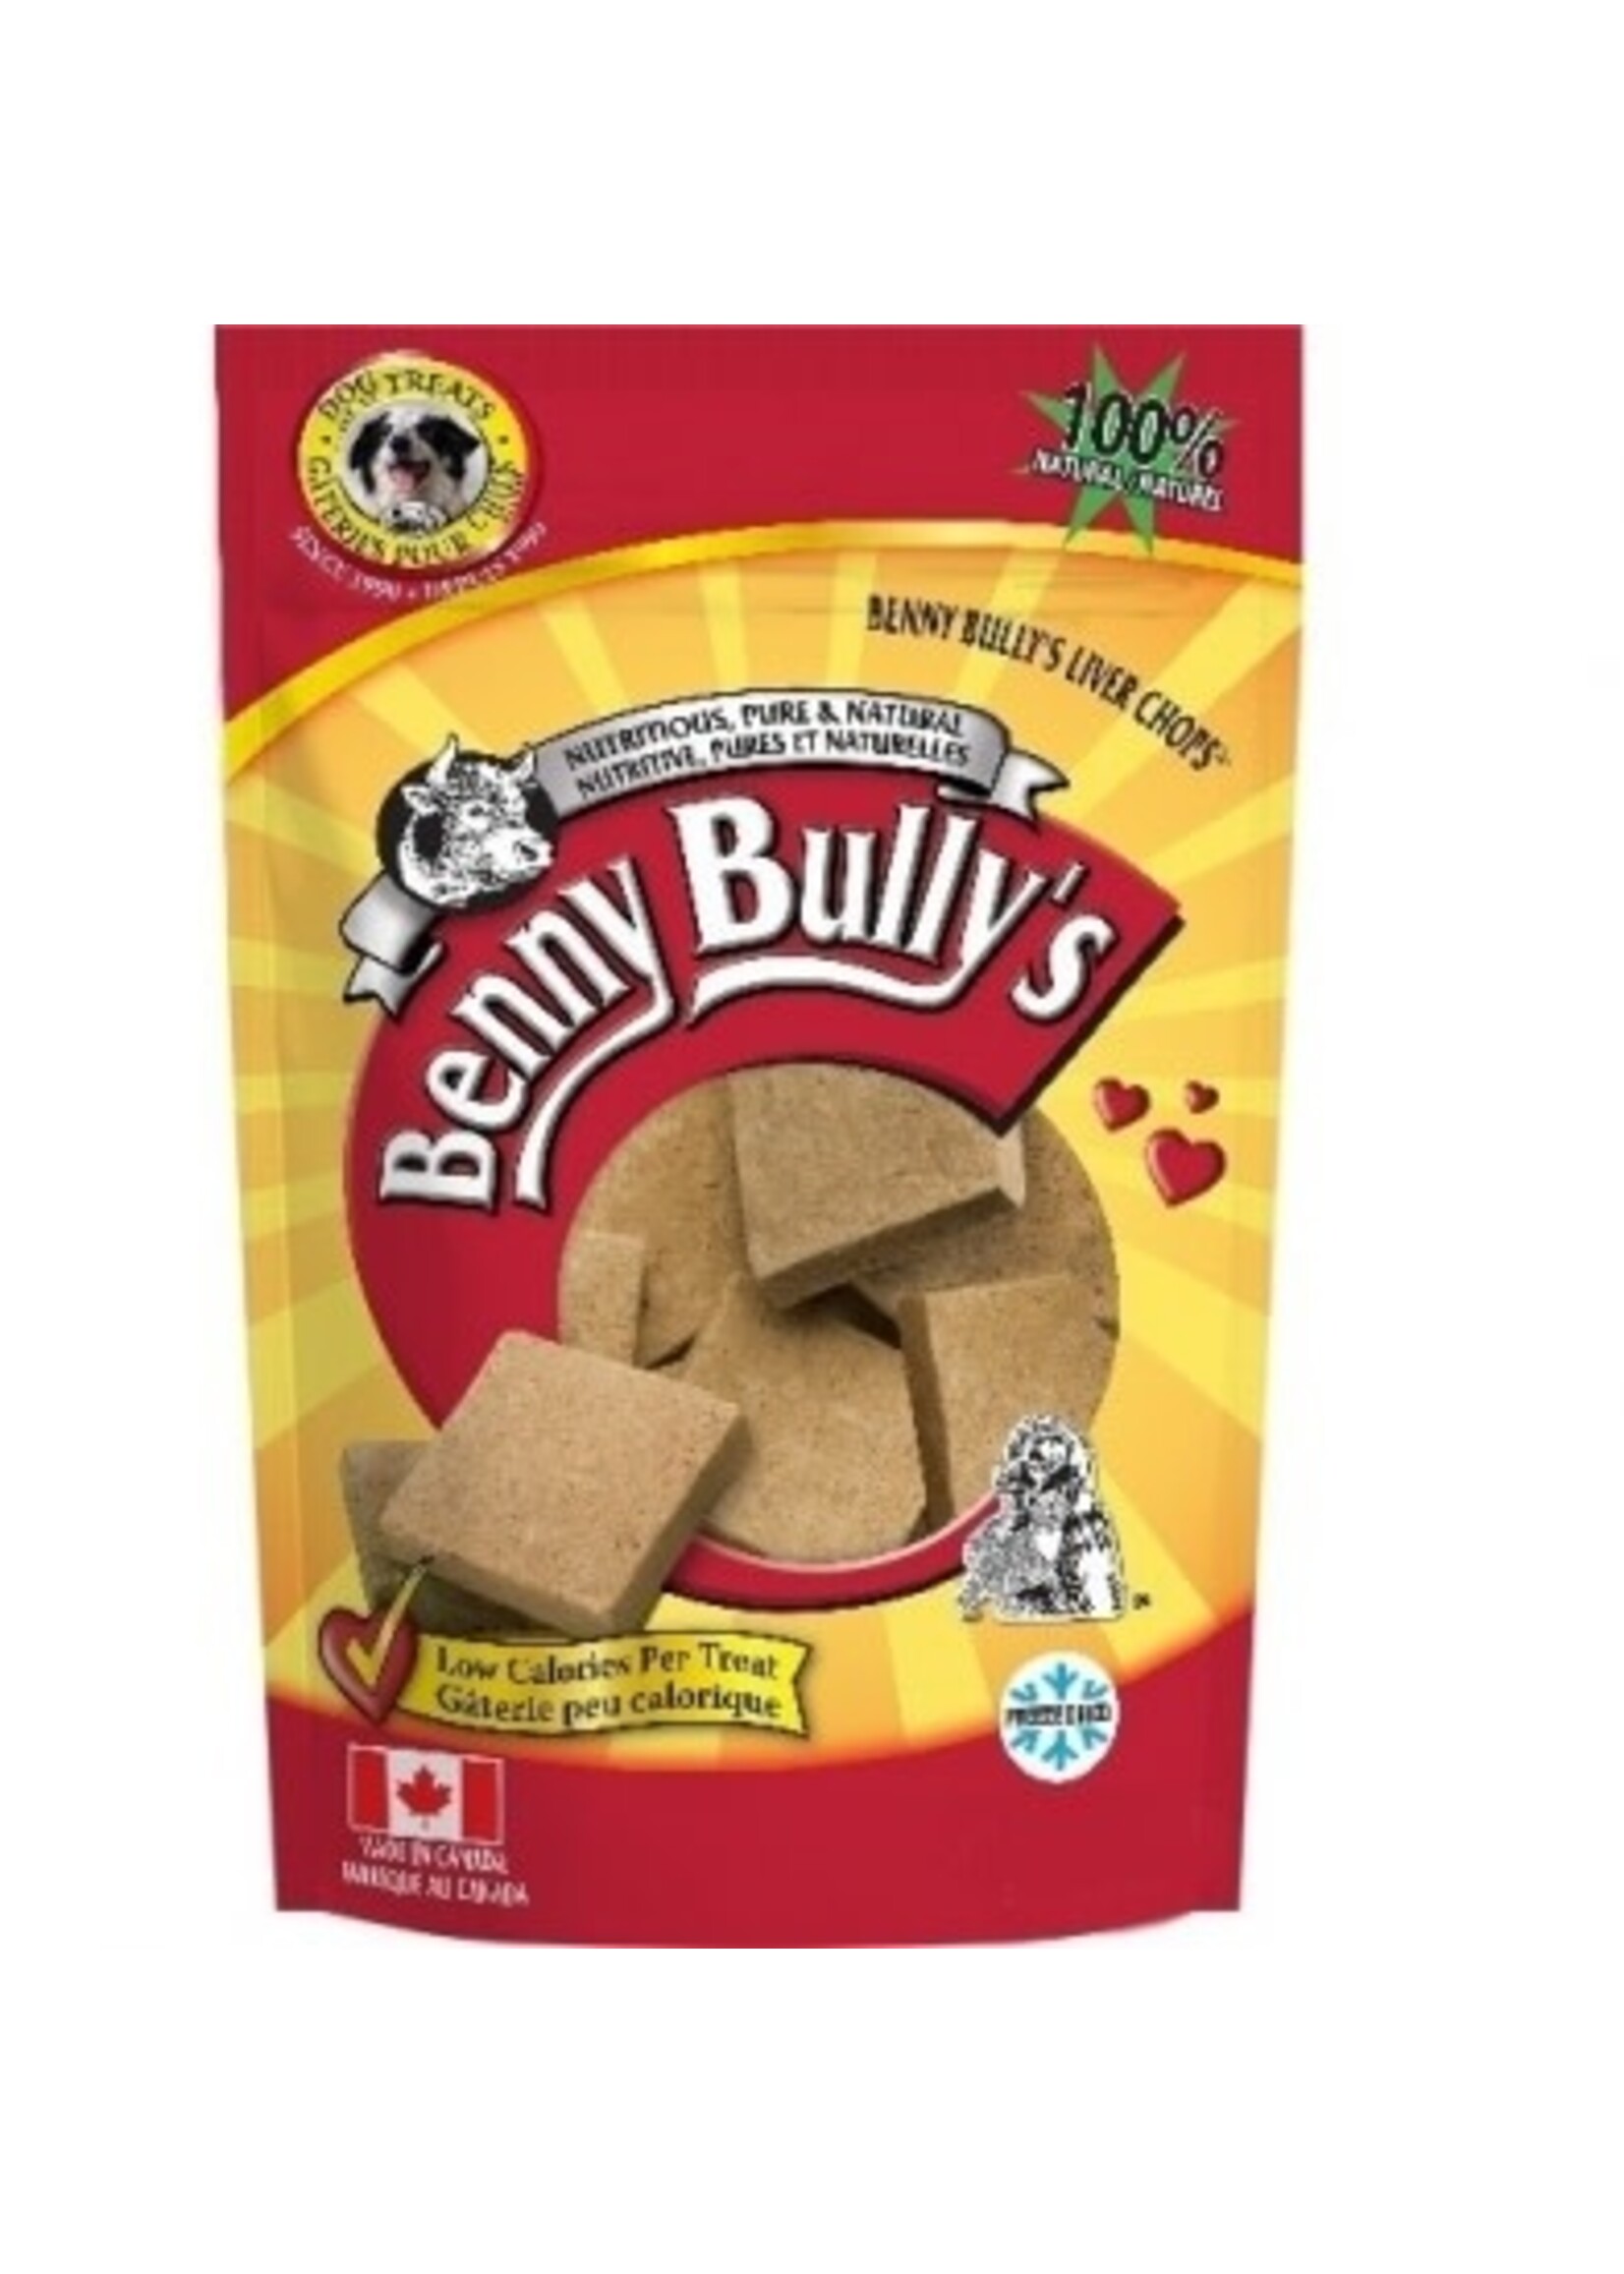 Benny Bully's Benny Bully's Dog Liver Chops Original